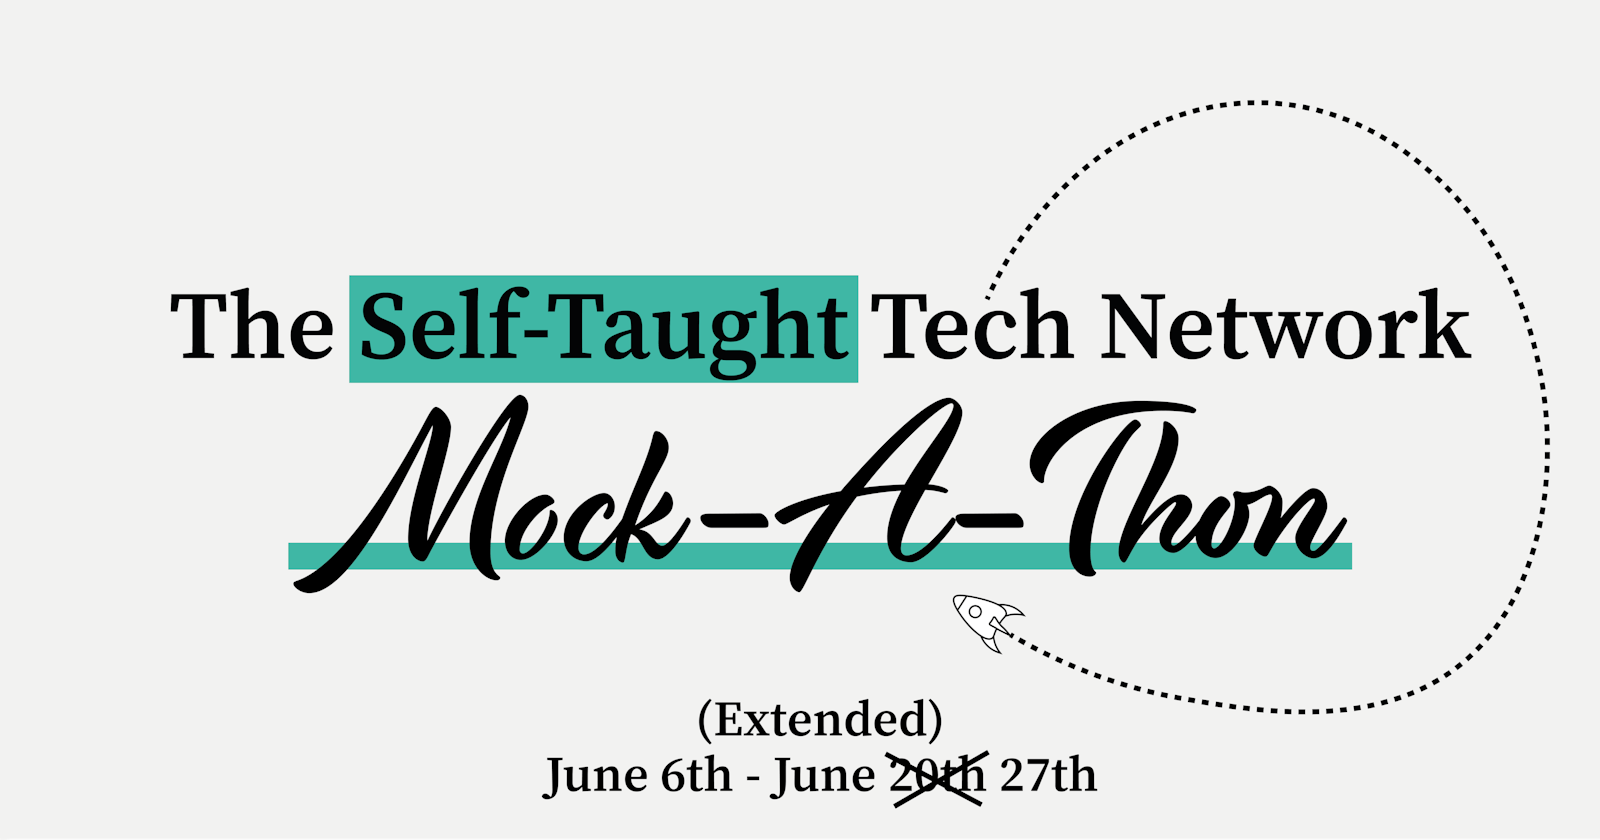 The Self-Taught Tech Network -
Mockathon Challenge